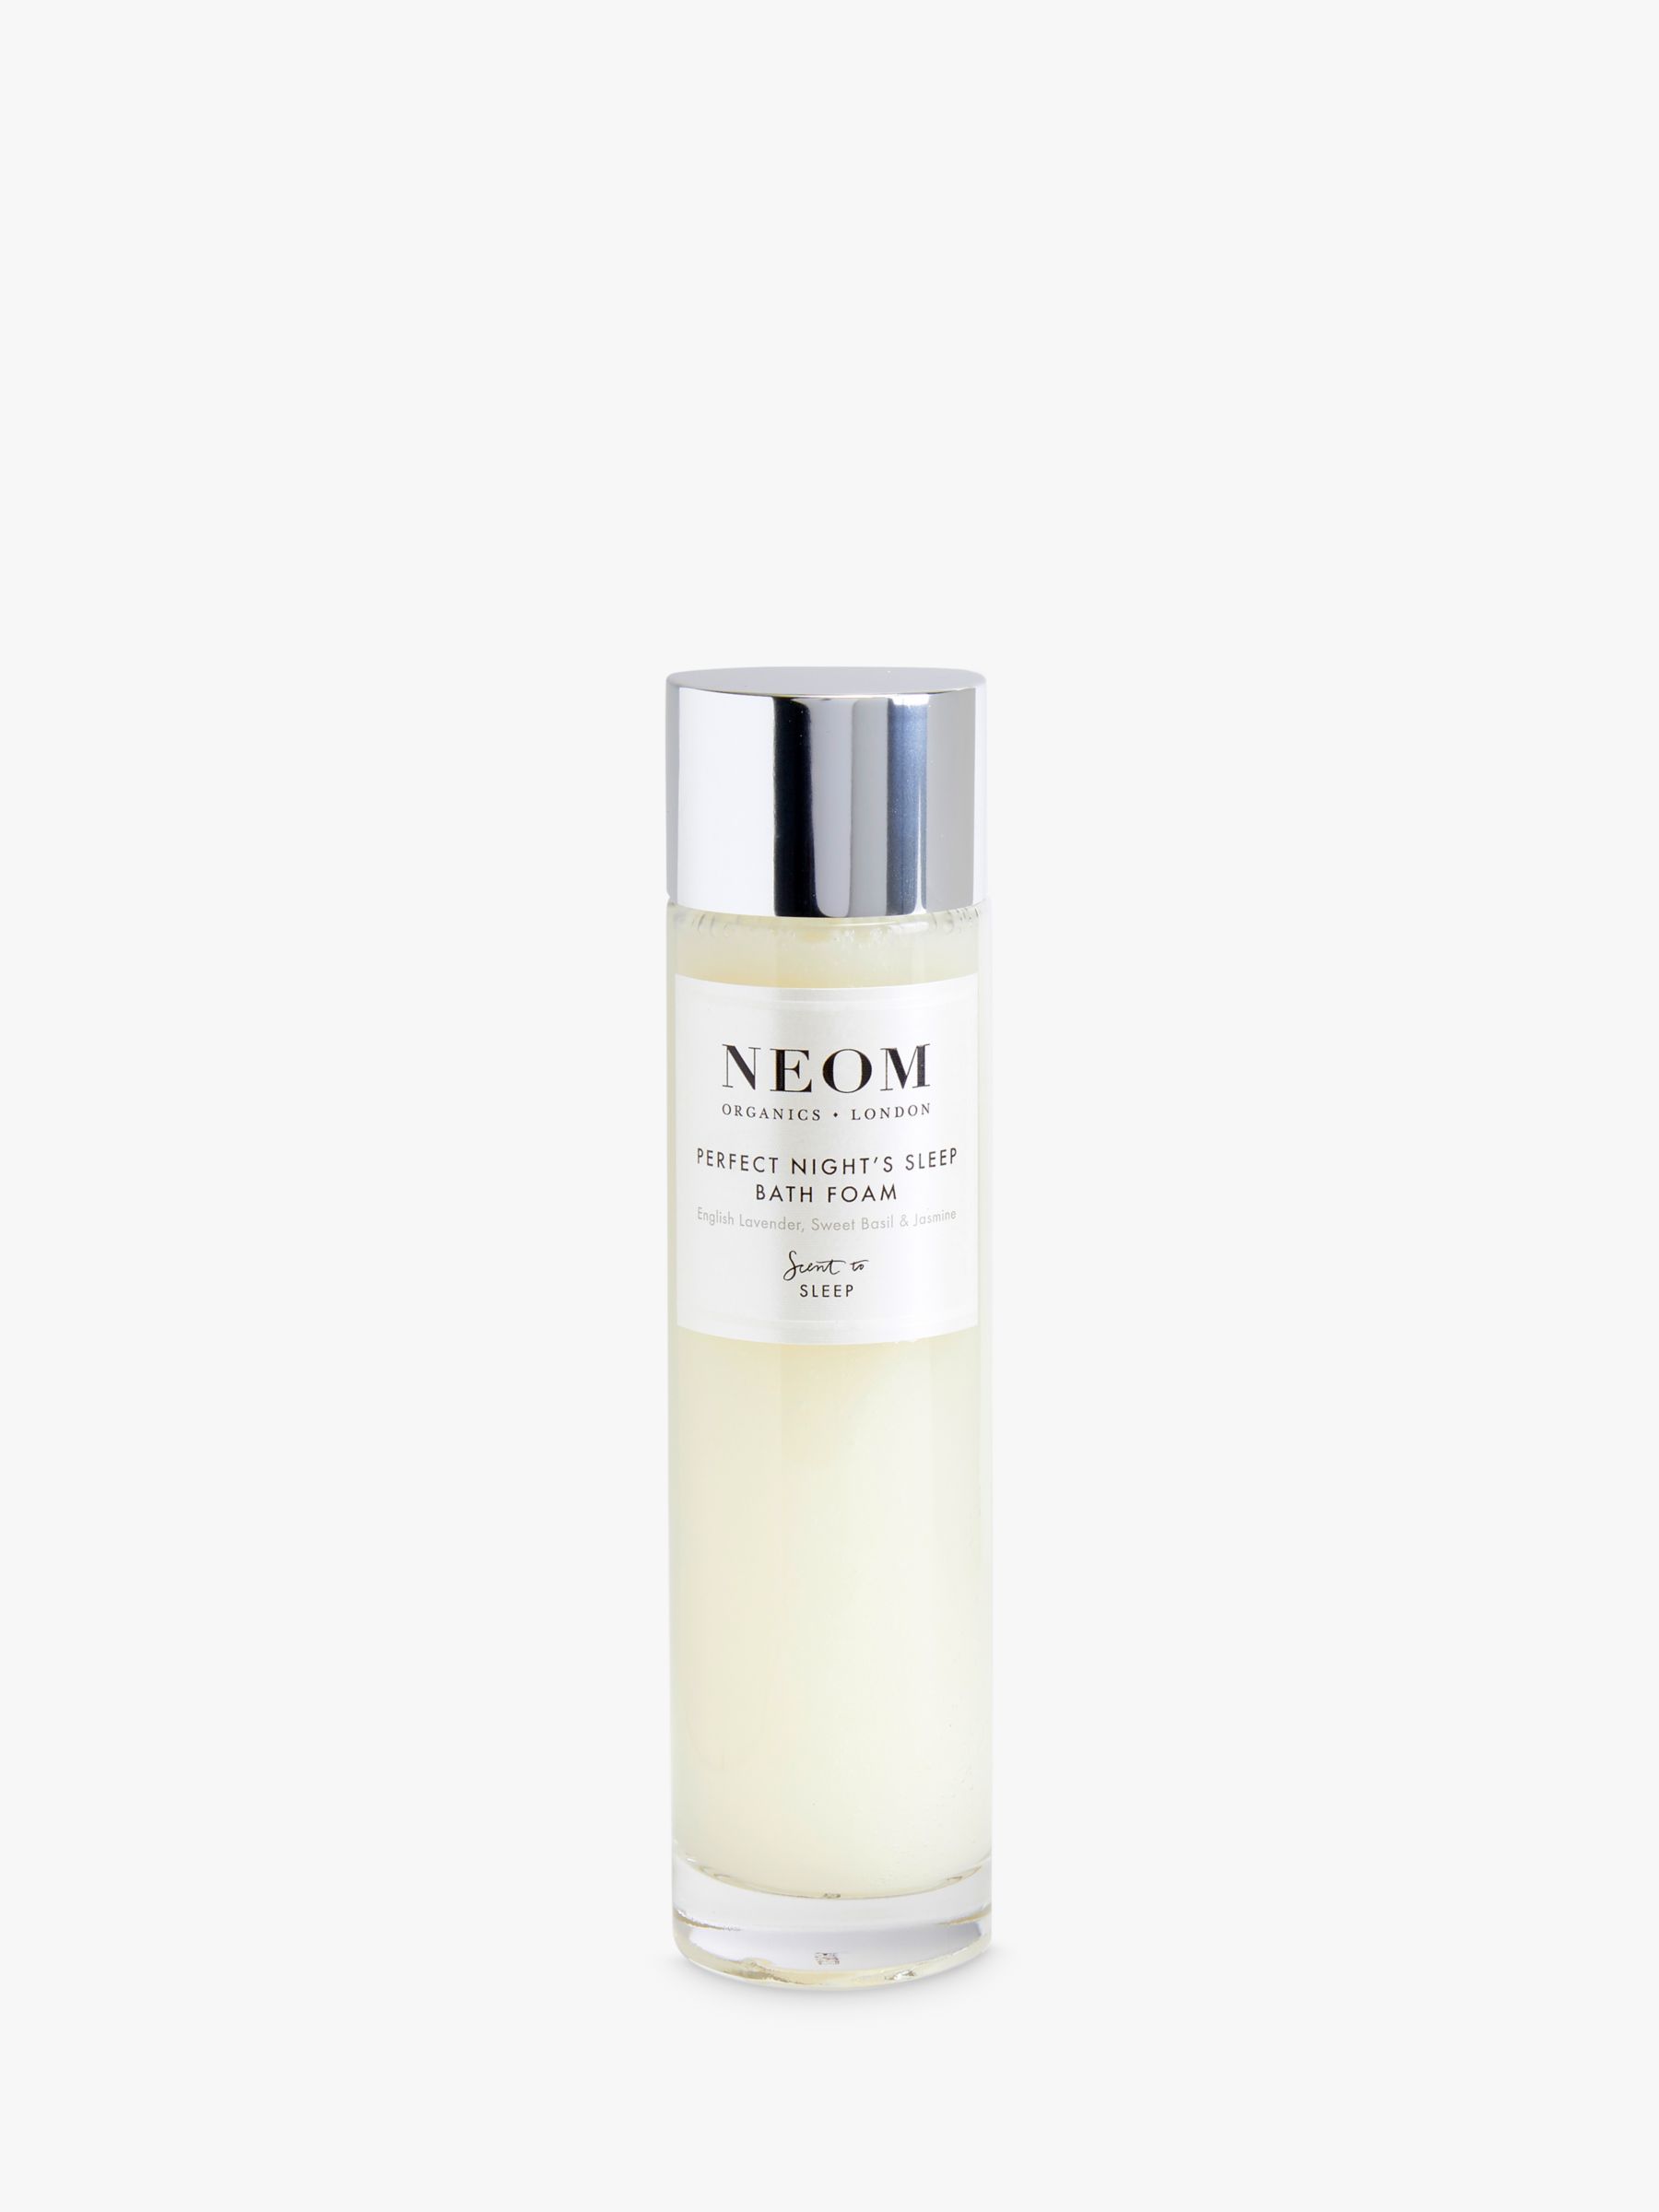 Neom Organics London Perfect Night's Sleep Bath Foam, 200ml